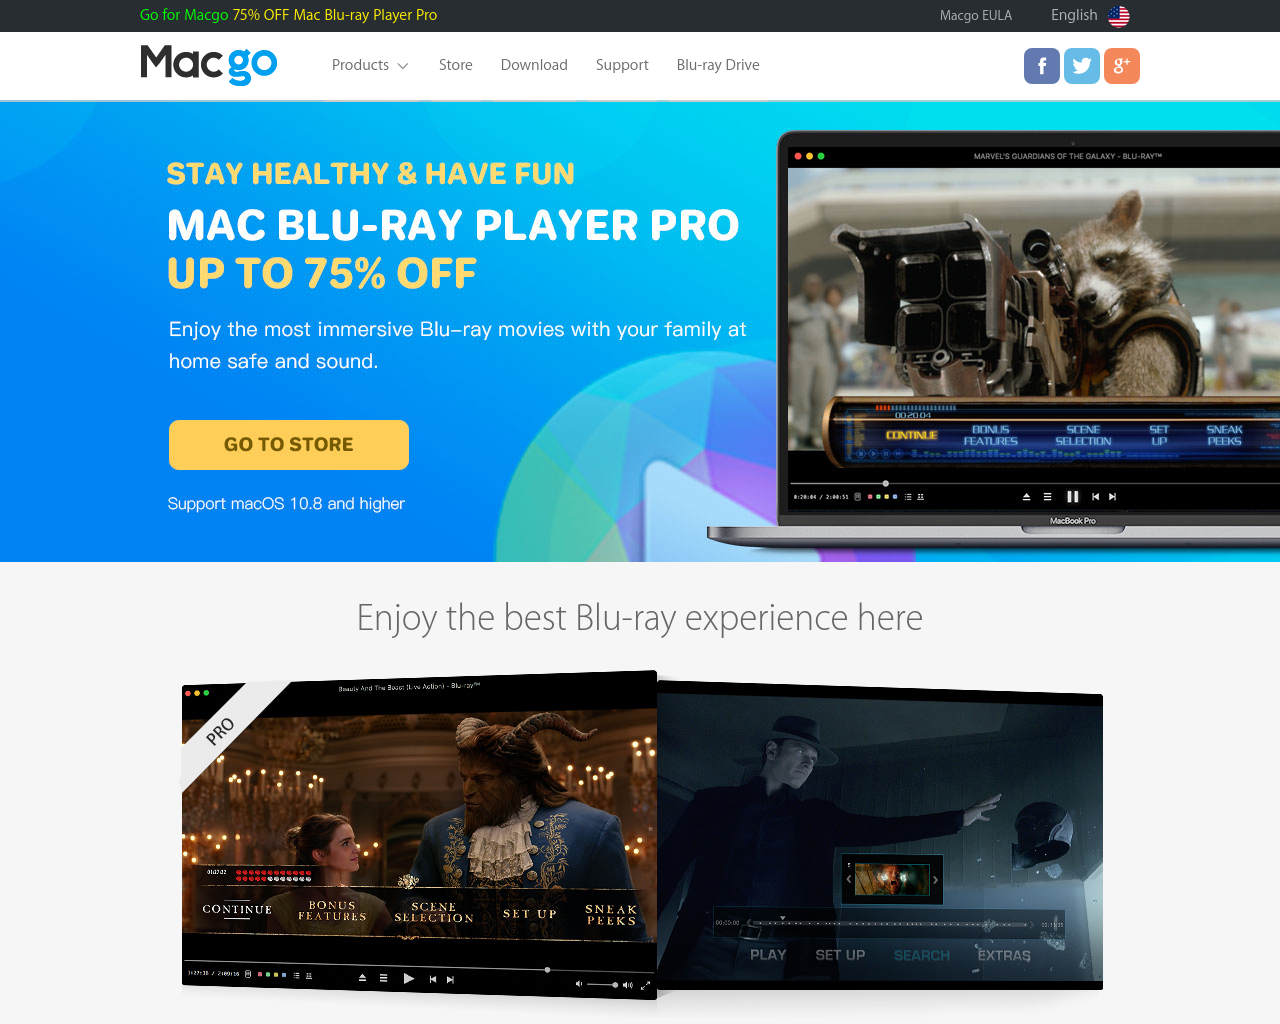 macblurayplayer.com